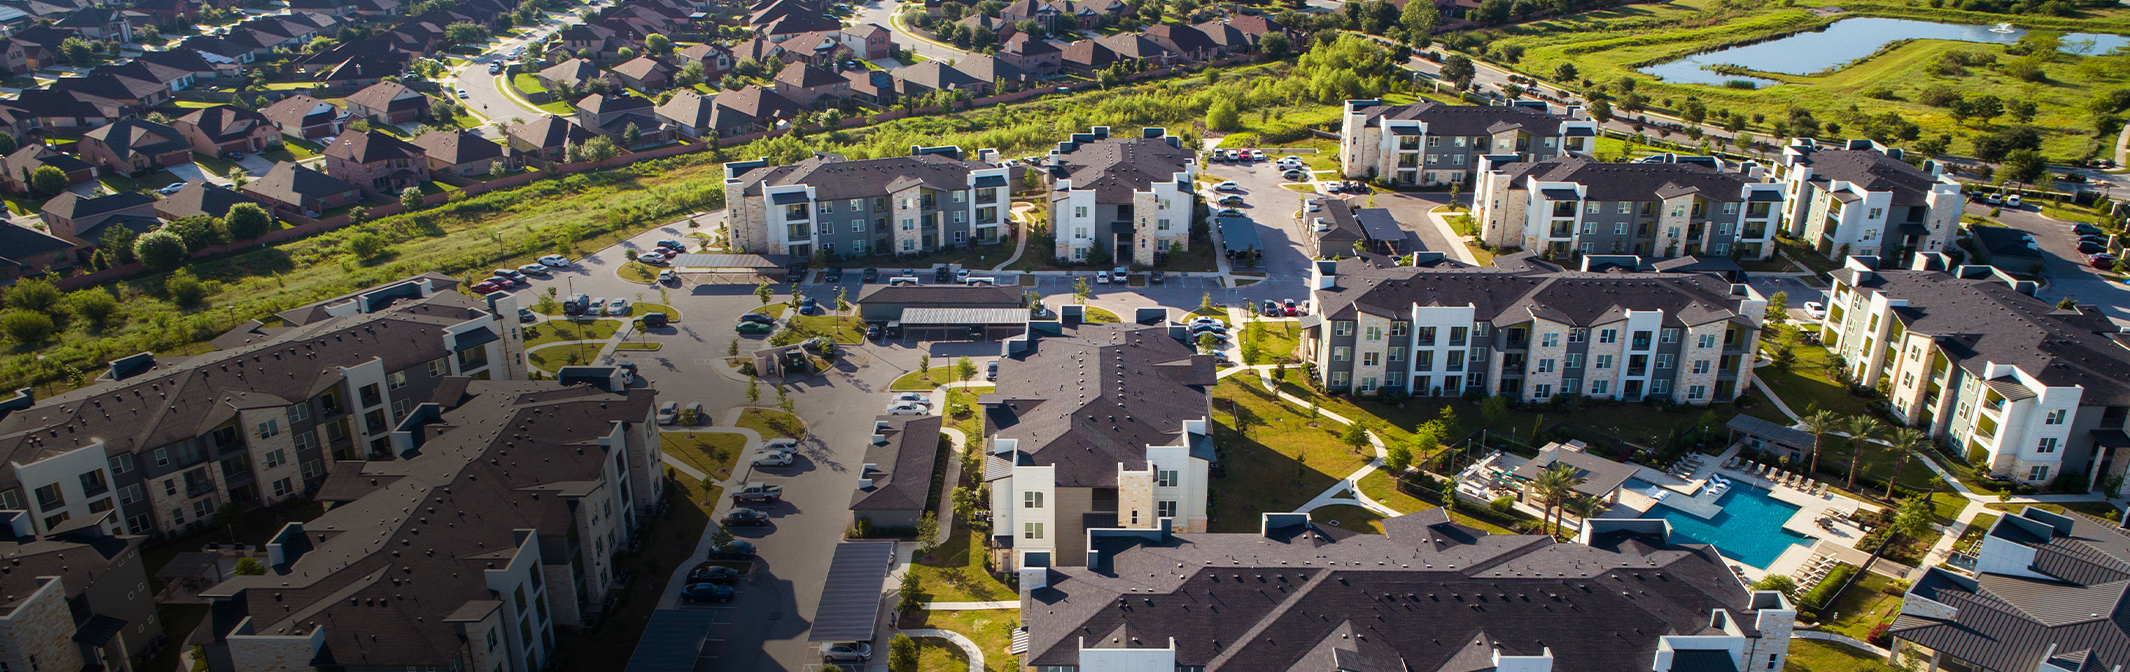 Aerial shot of residential housing